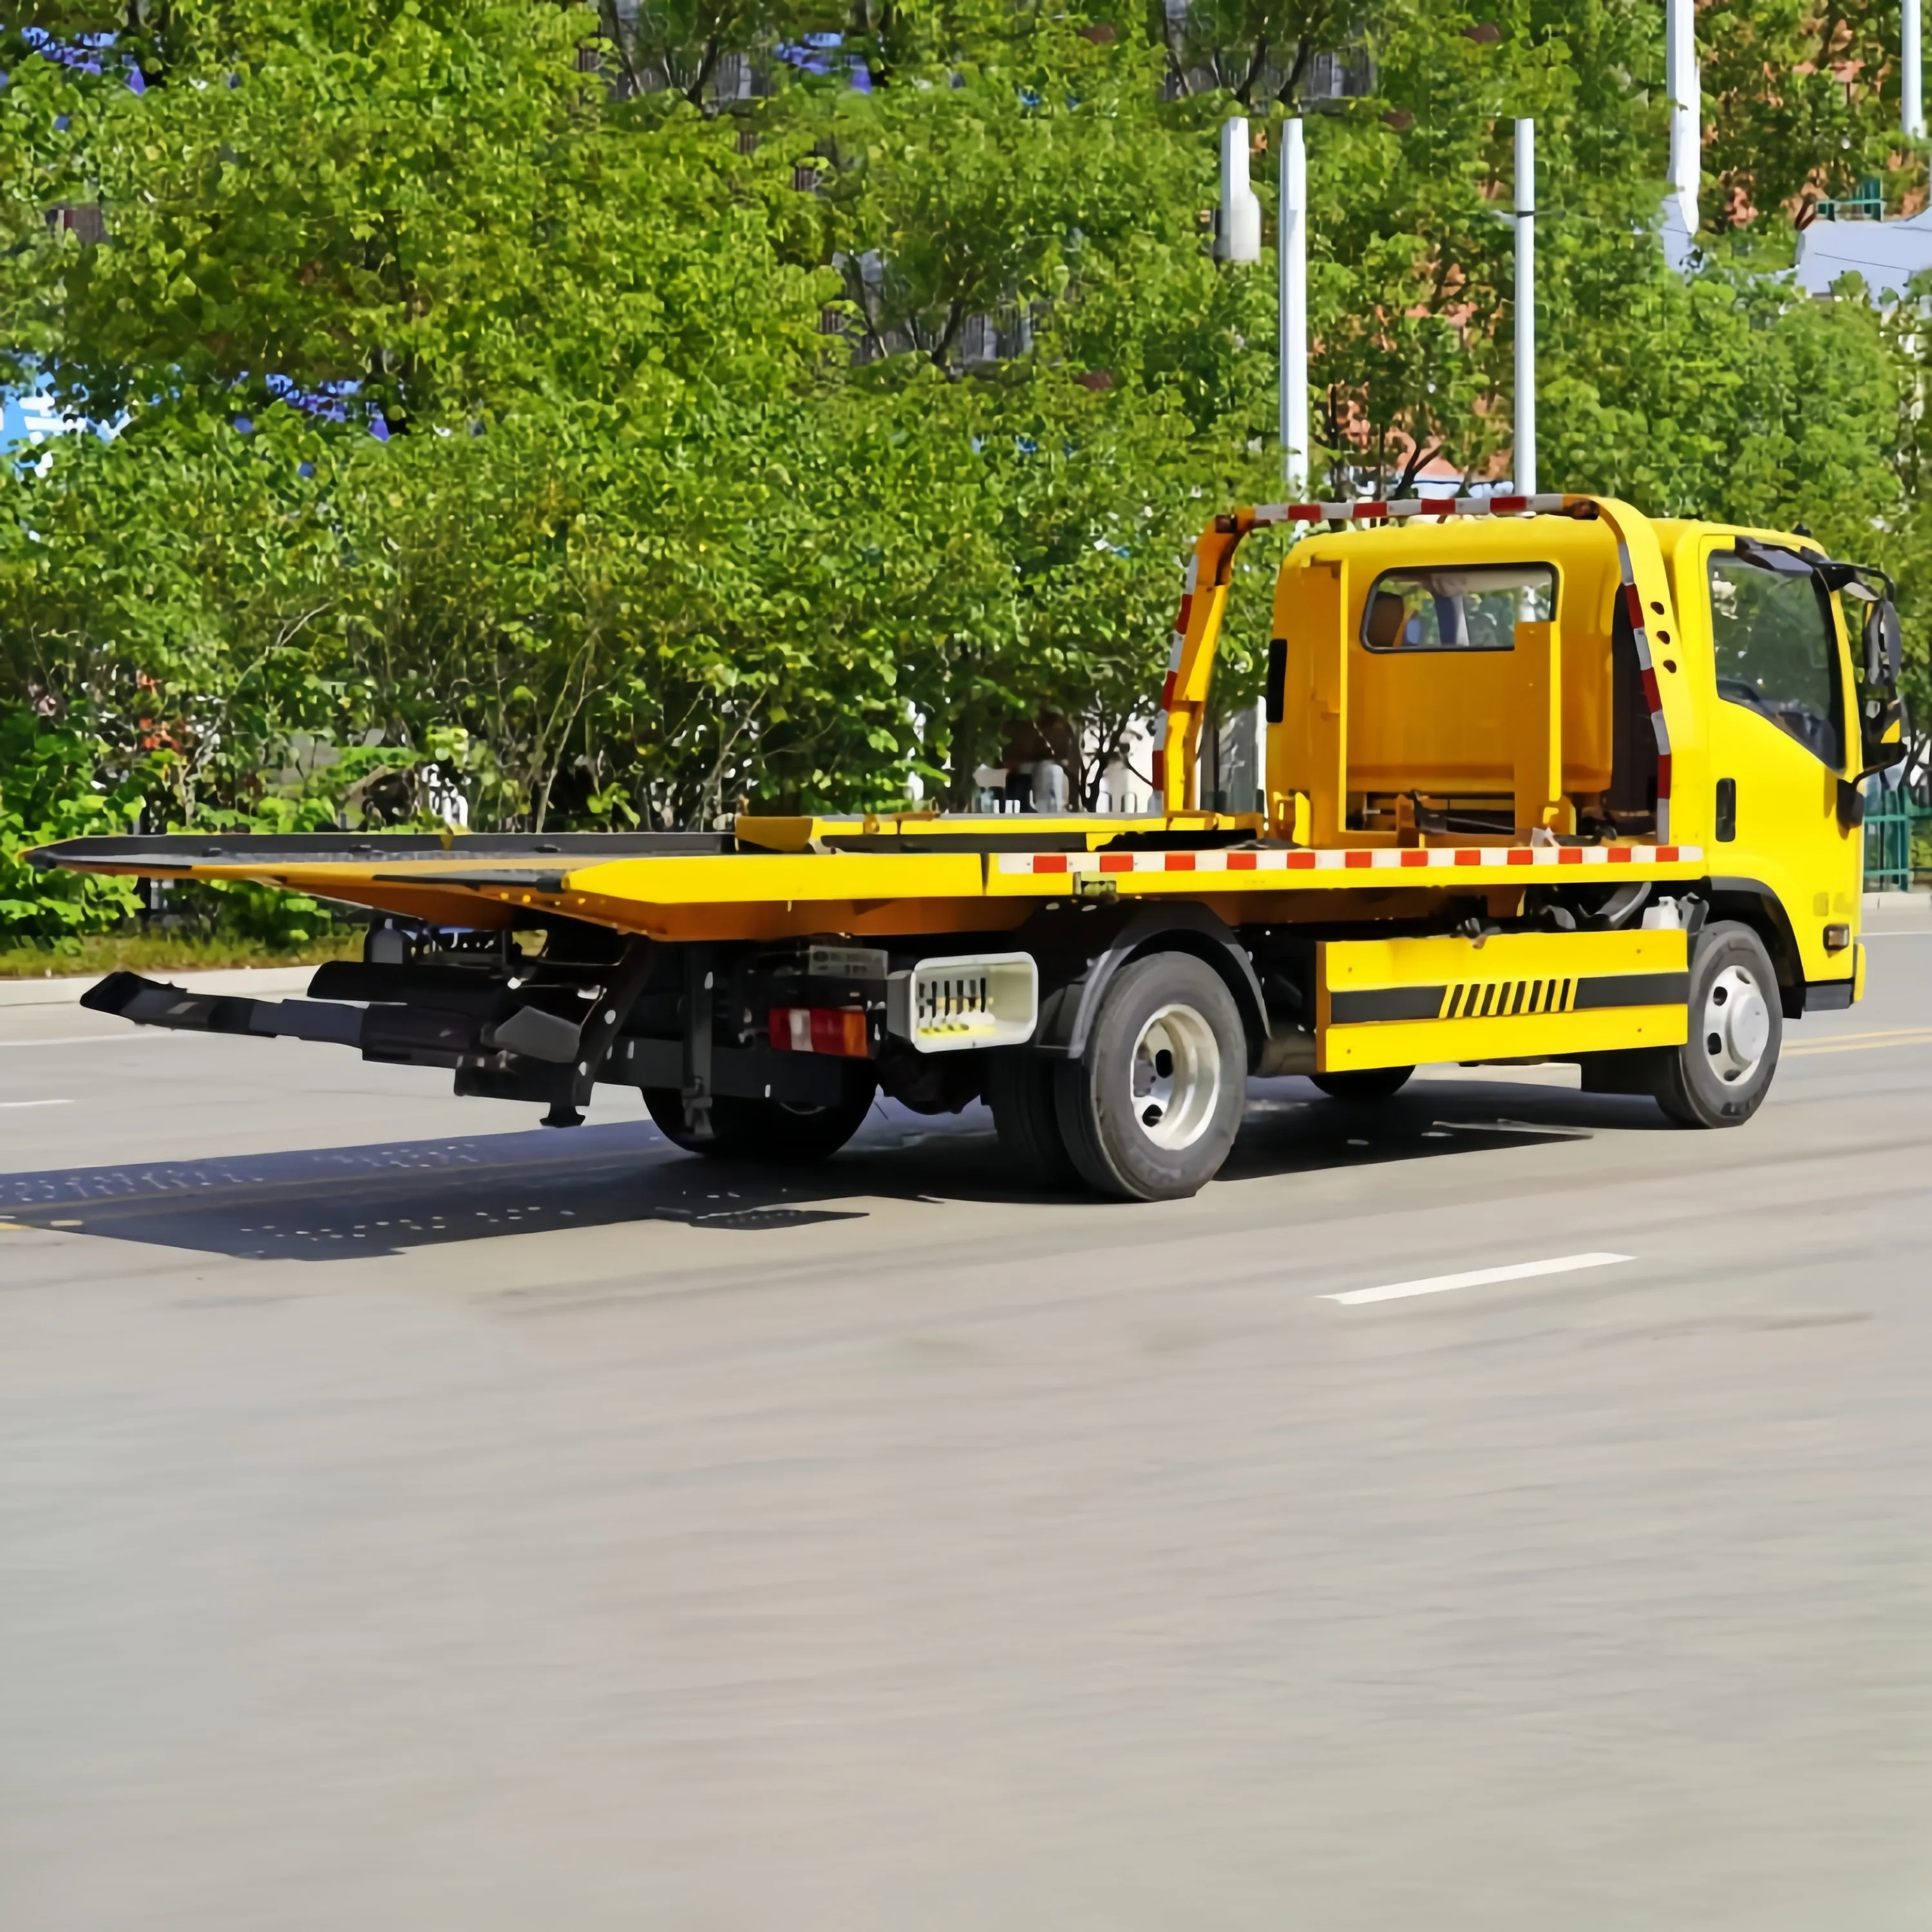 Venta caliente recomendación Isuzu remolque camión 5 toneladas coche portador remolque avería camión